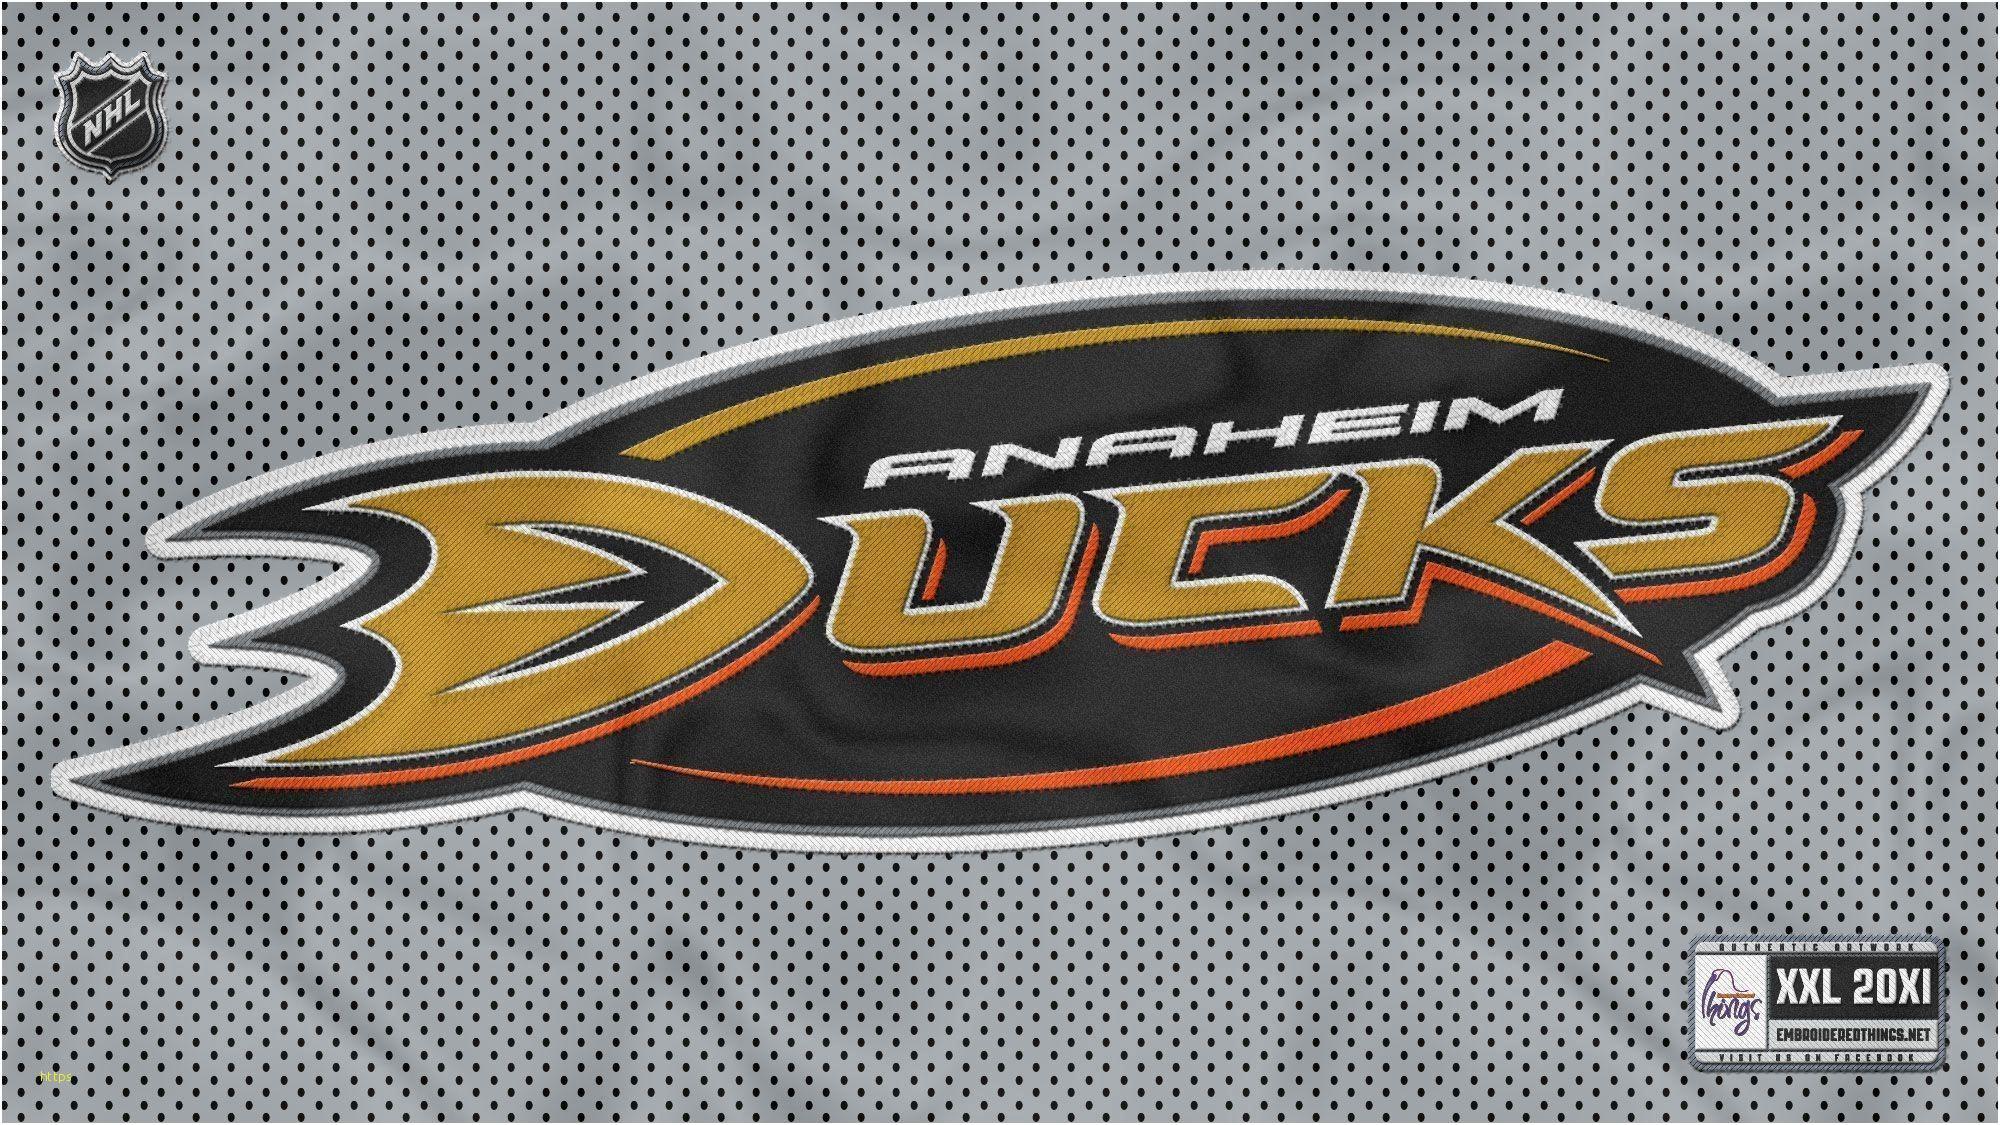 Best Of Anaheim Ducks Wallpaper. The Best Wallpaper Collection